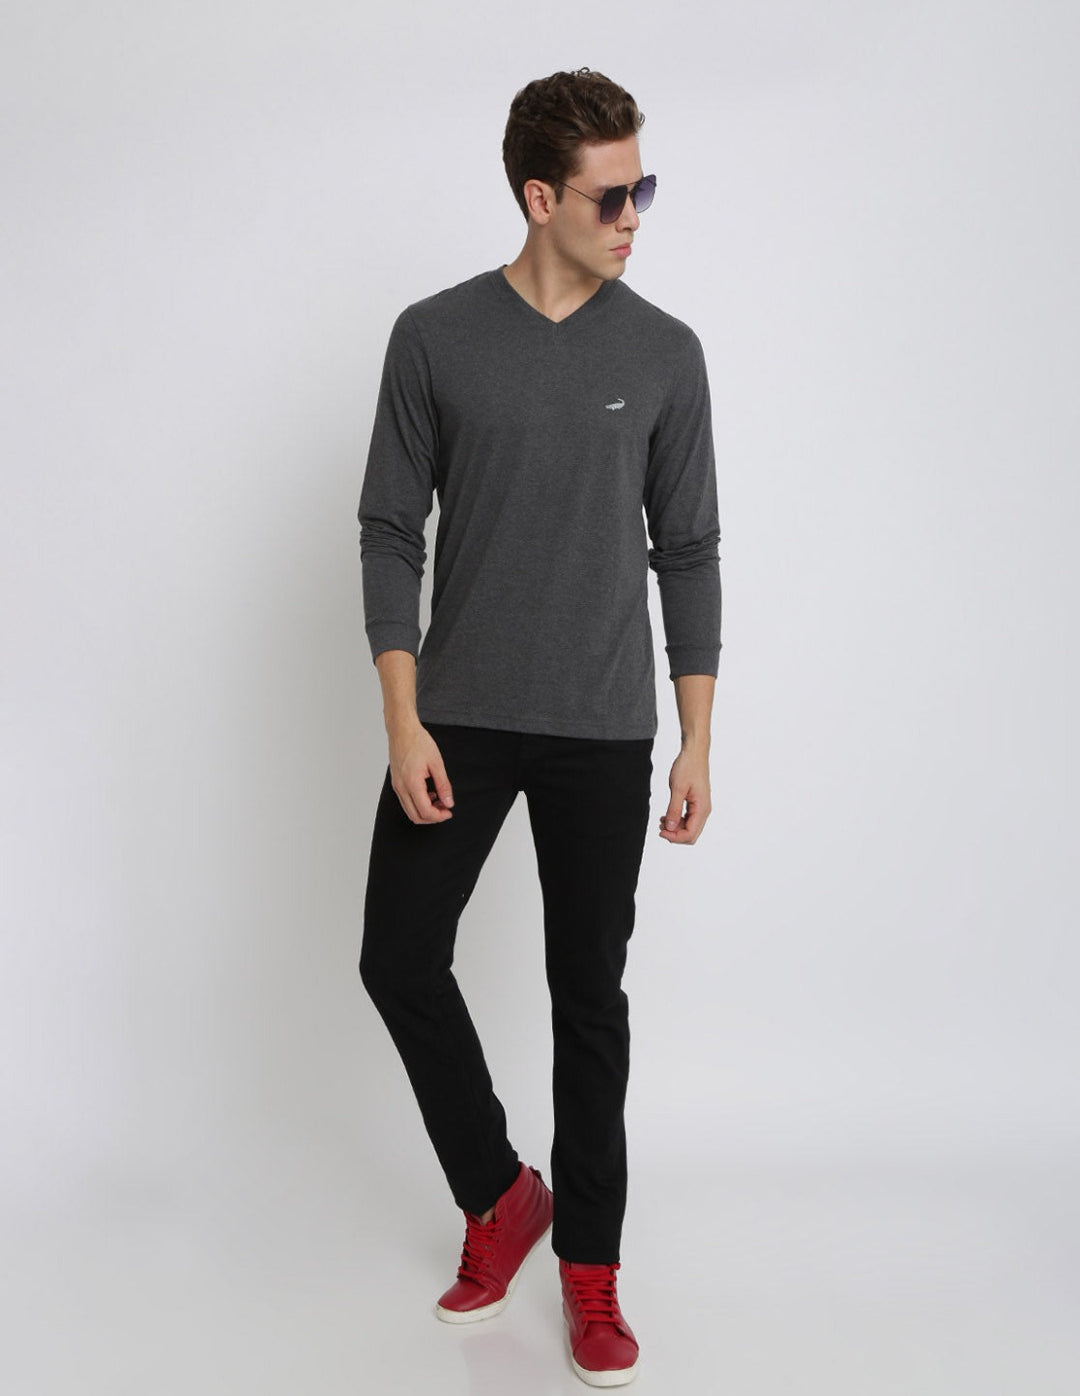 Men's Solid V Neck Full Sleeve Cotton T-Shirt - CHARCOAL MELANGE